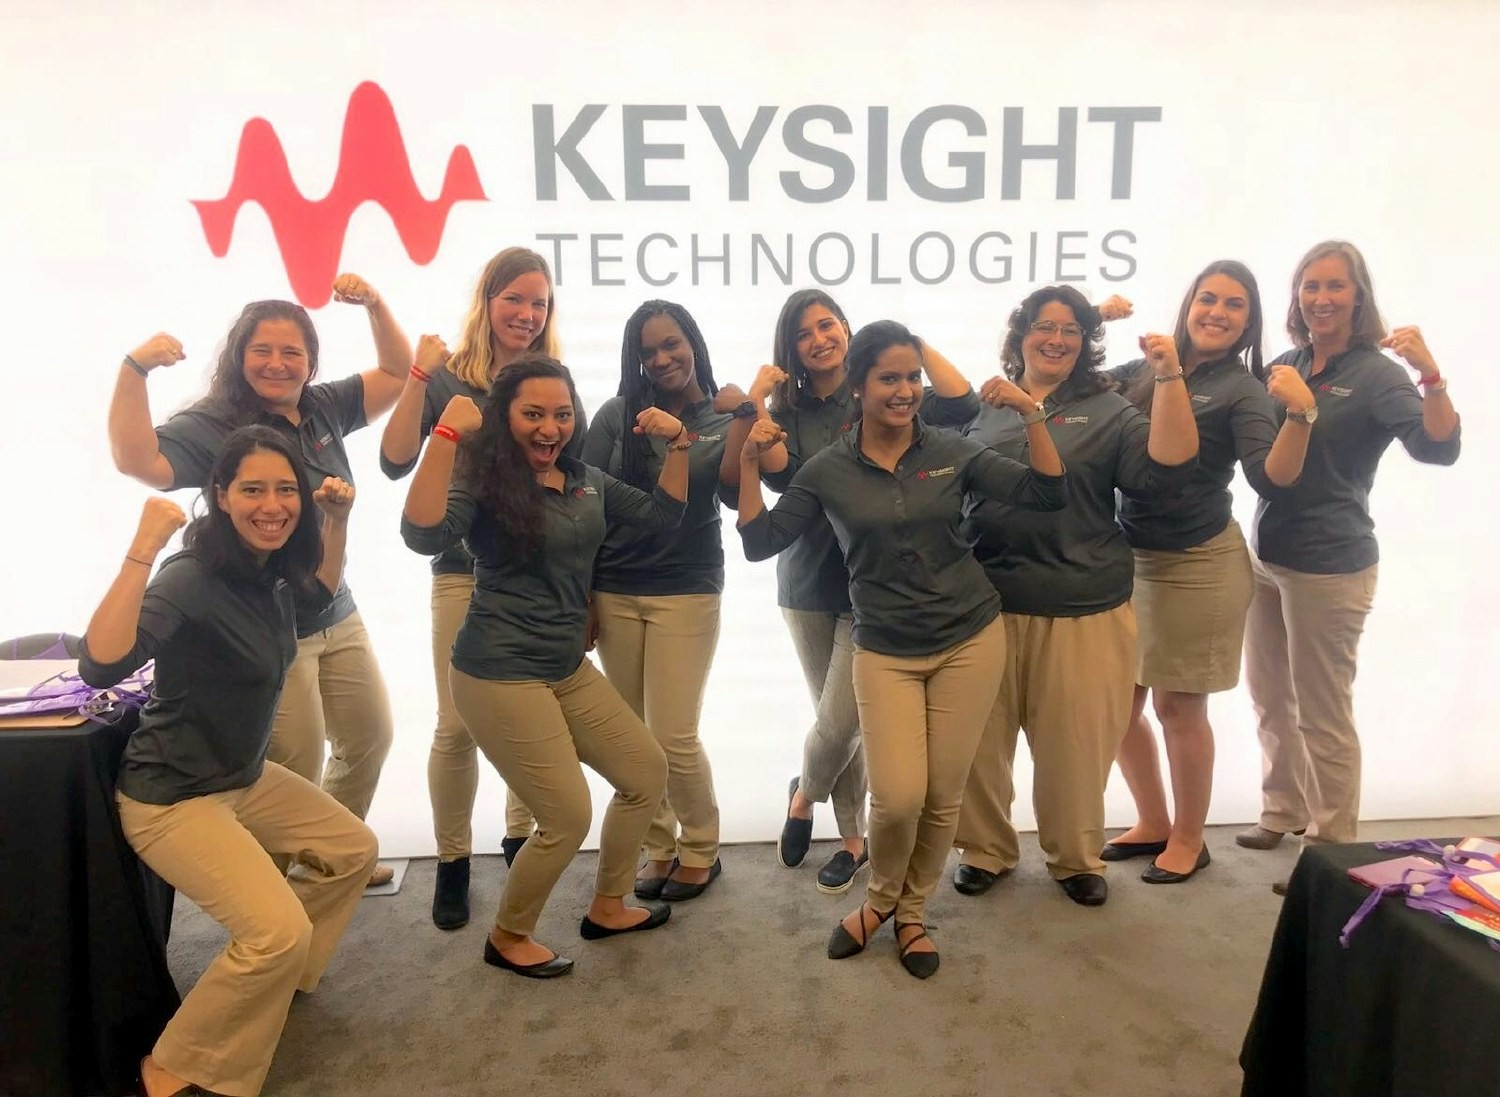 Keysight women engineers flex their muscles